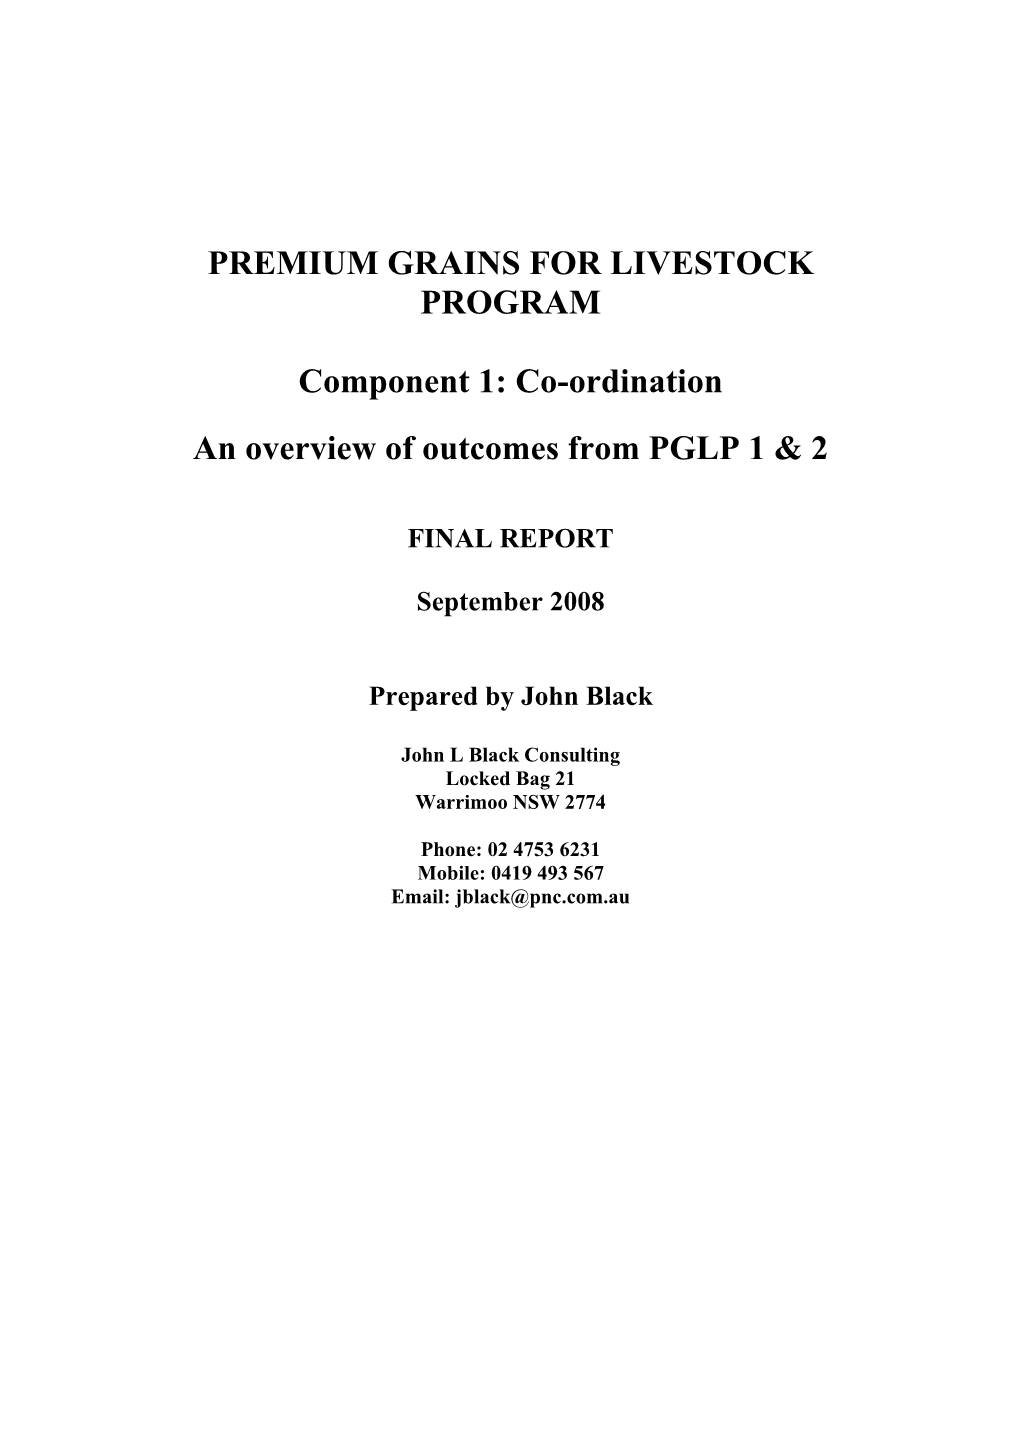 Premium Grains for Livestock Program